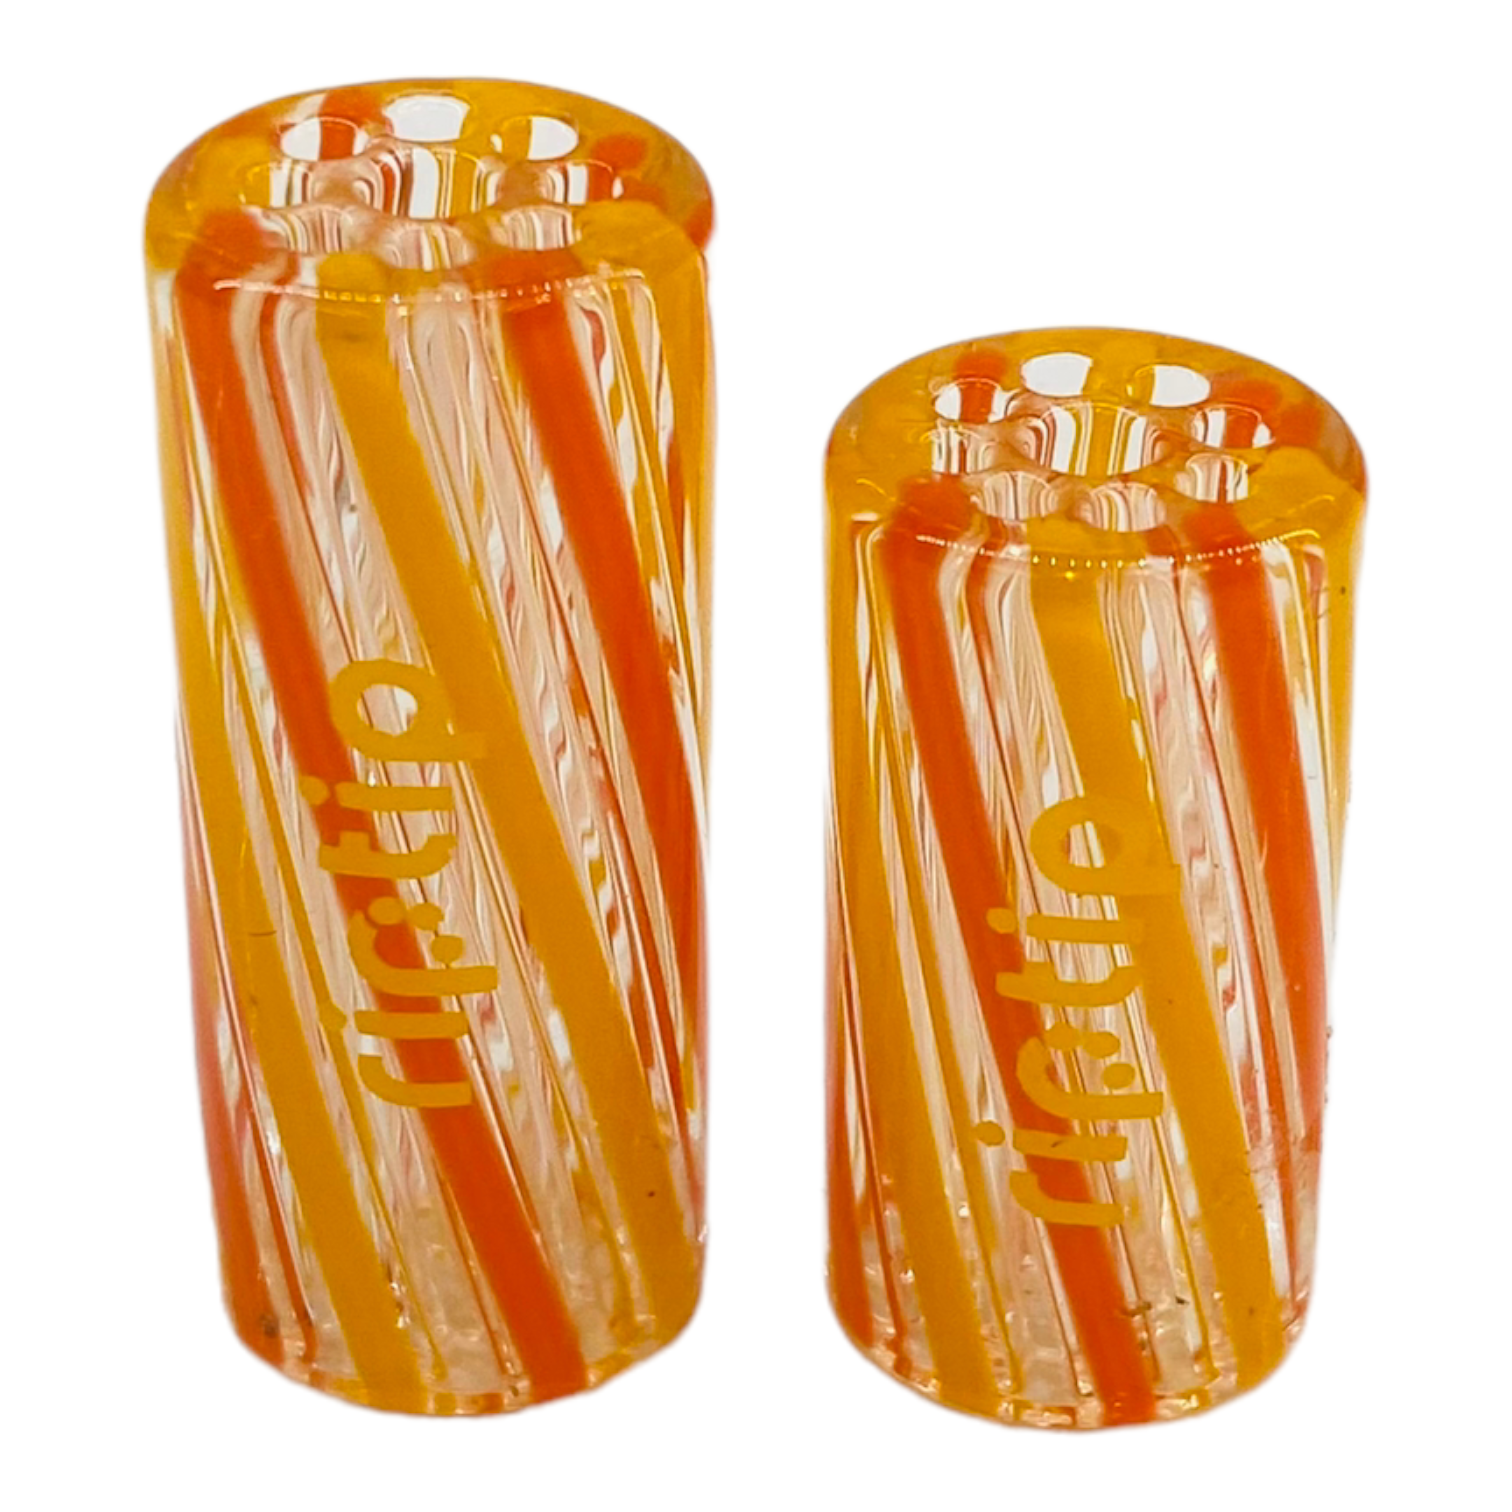 Gordo Scientific Citrus Orange & Yellow 13mm Wide Regular Length RipTip glass holder tip for sale